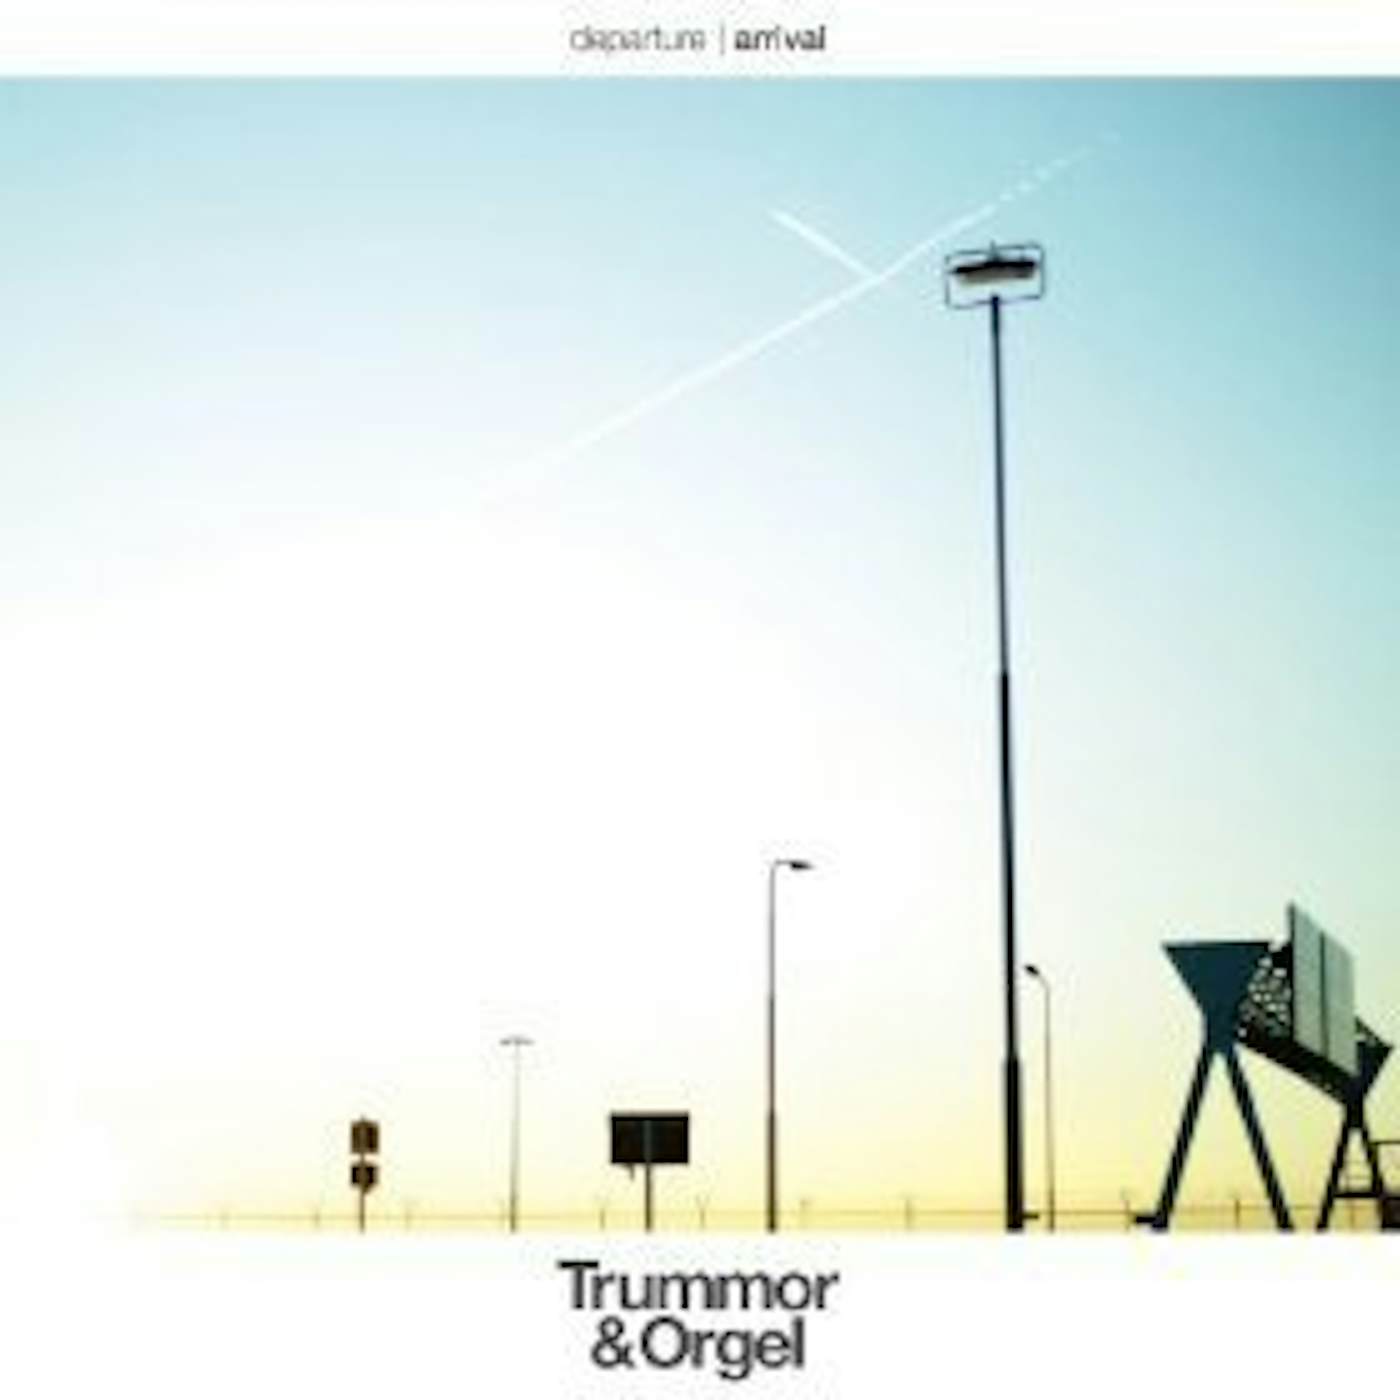 Trummor & Orgel Departure/arrival Vinyl Record